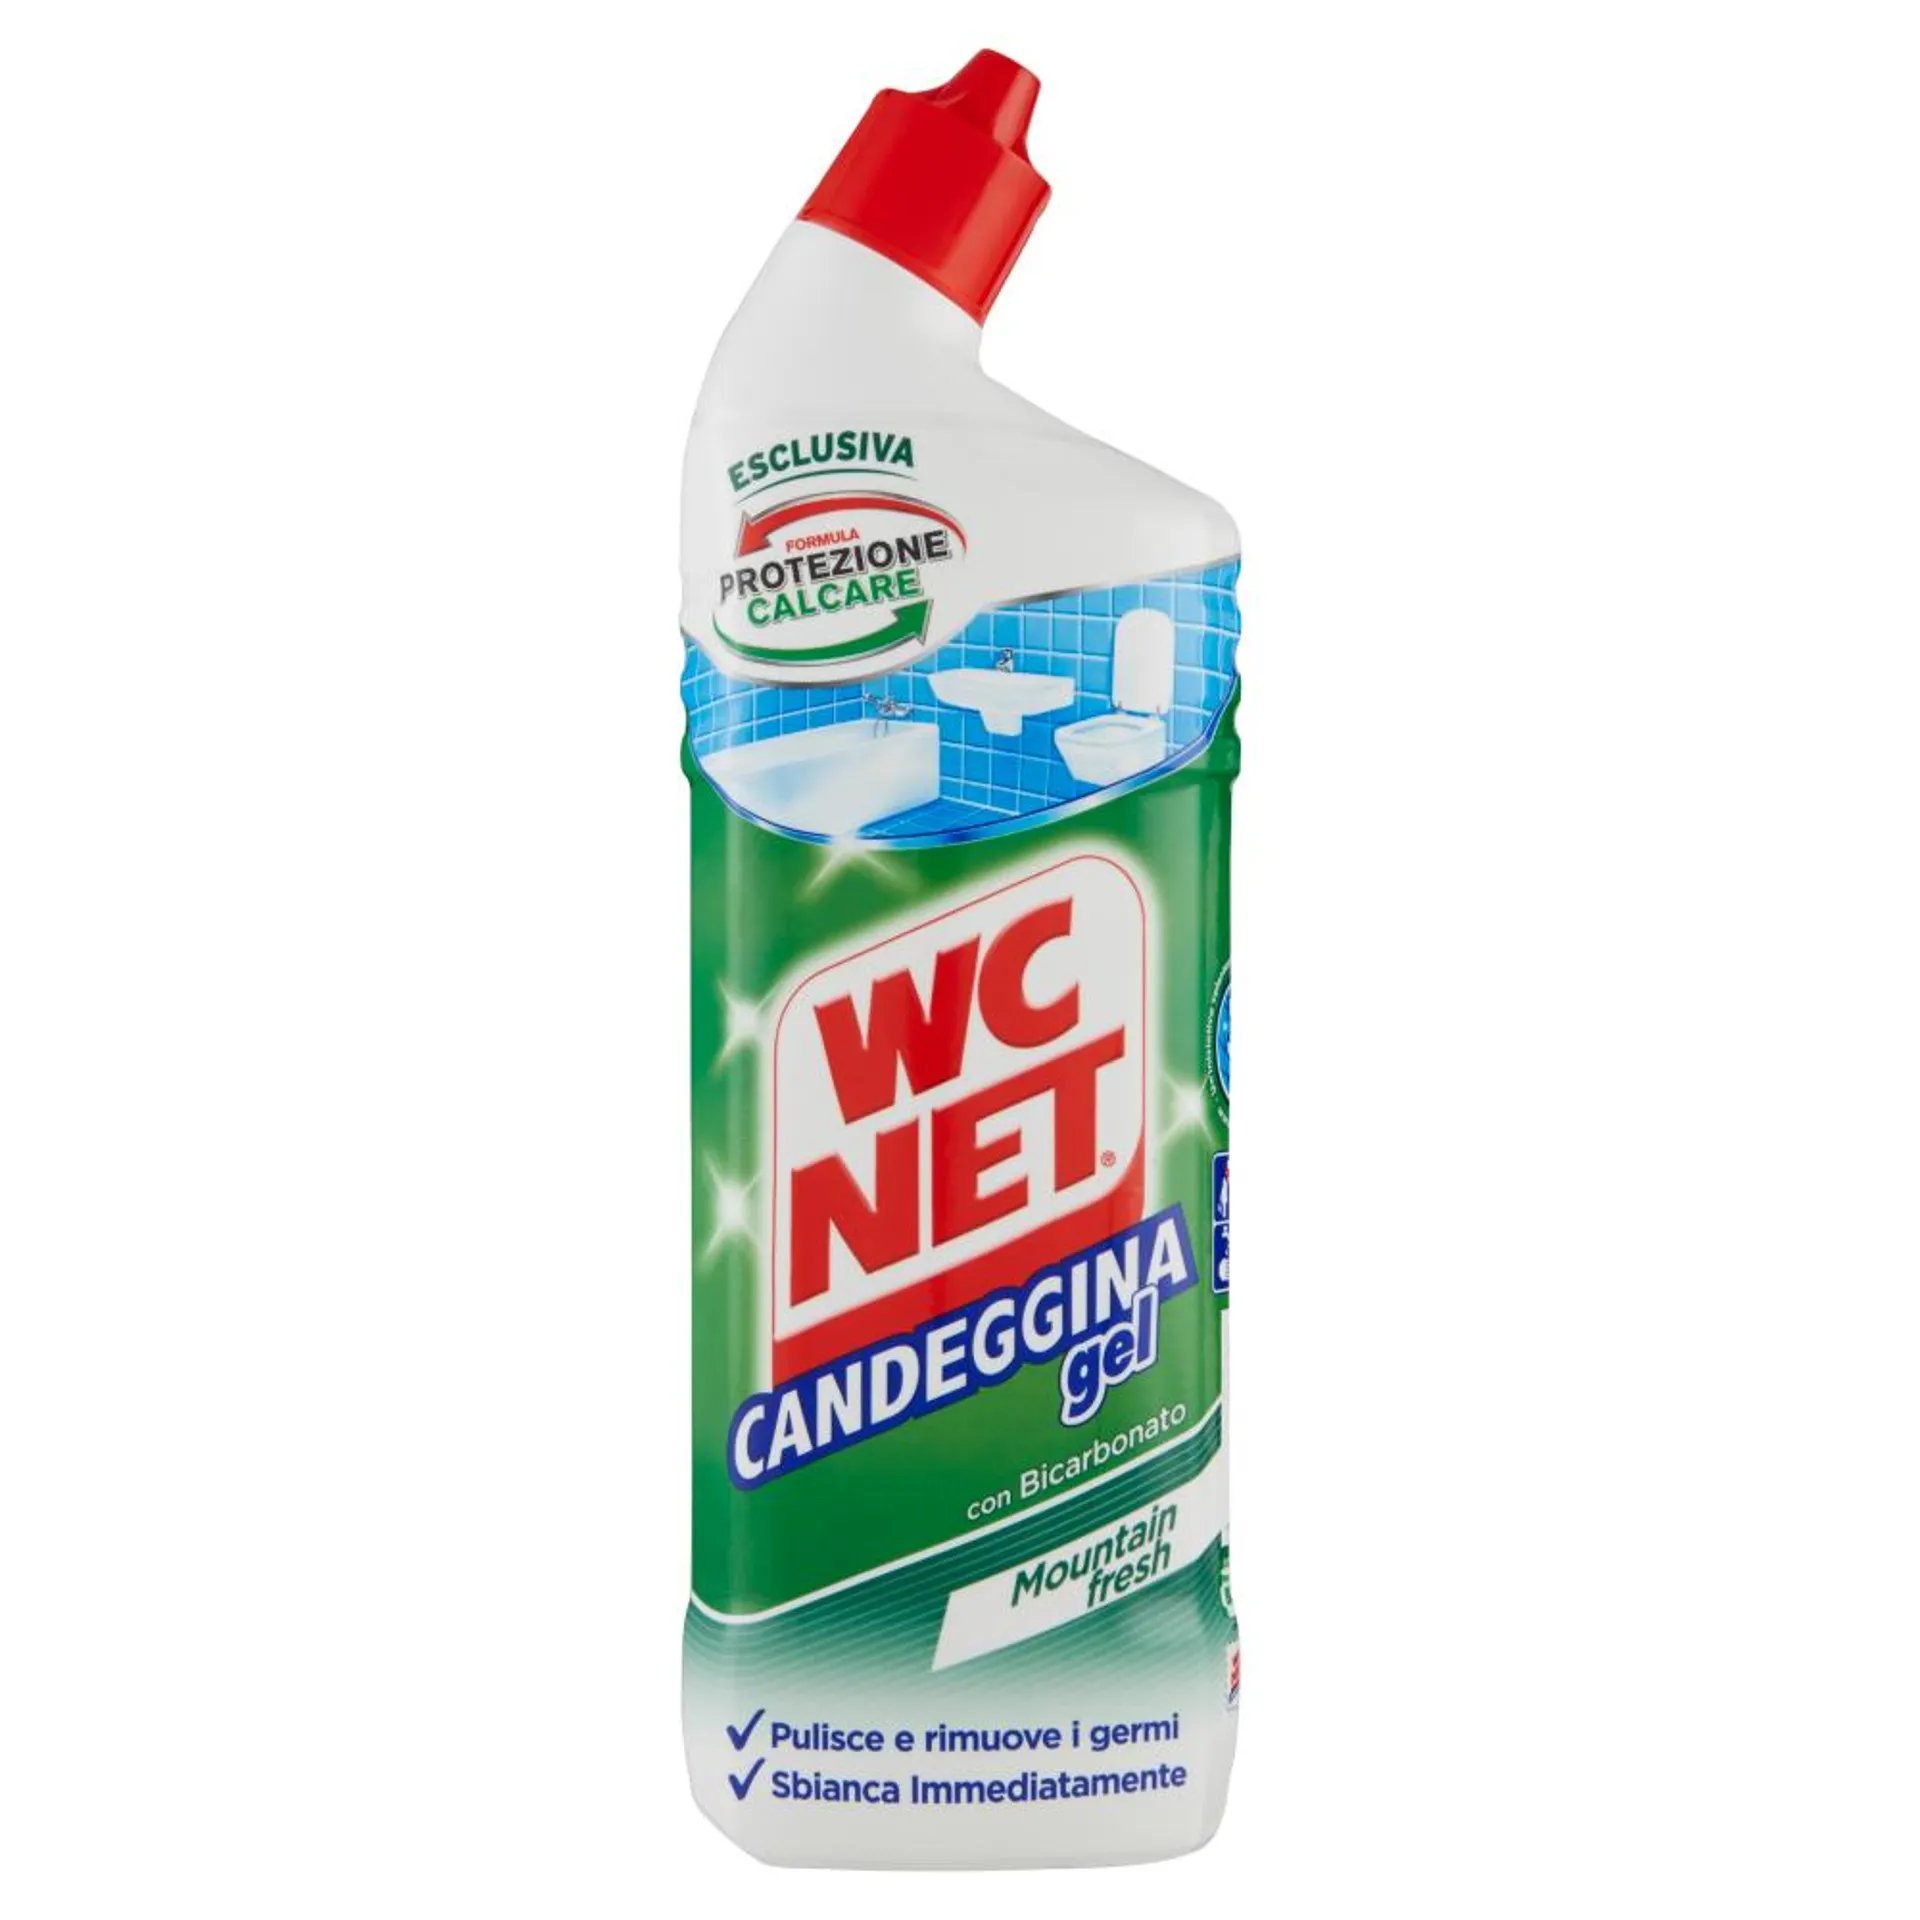 Wc Net - Candeggina Gel Extra White, Detergente per Sanitari e Superfici, Mountain Fresh, 800 ml